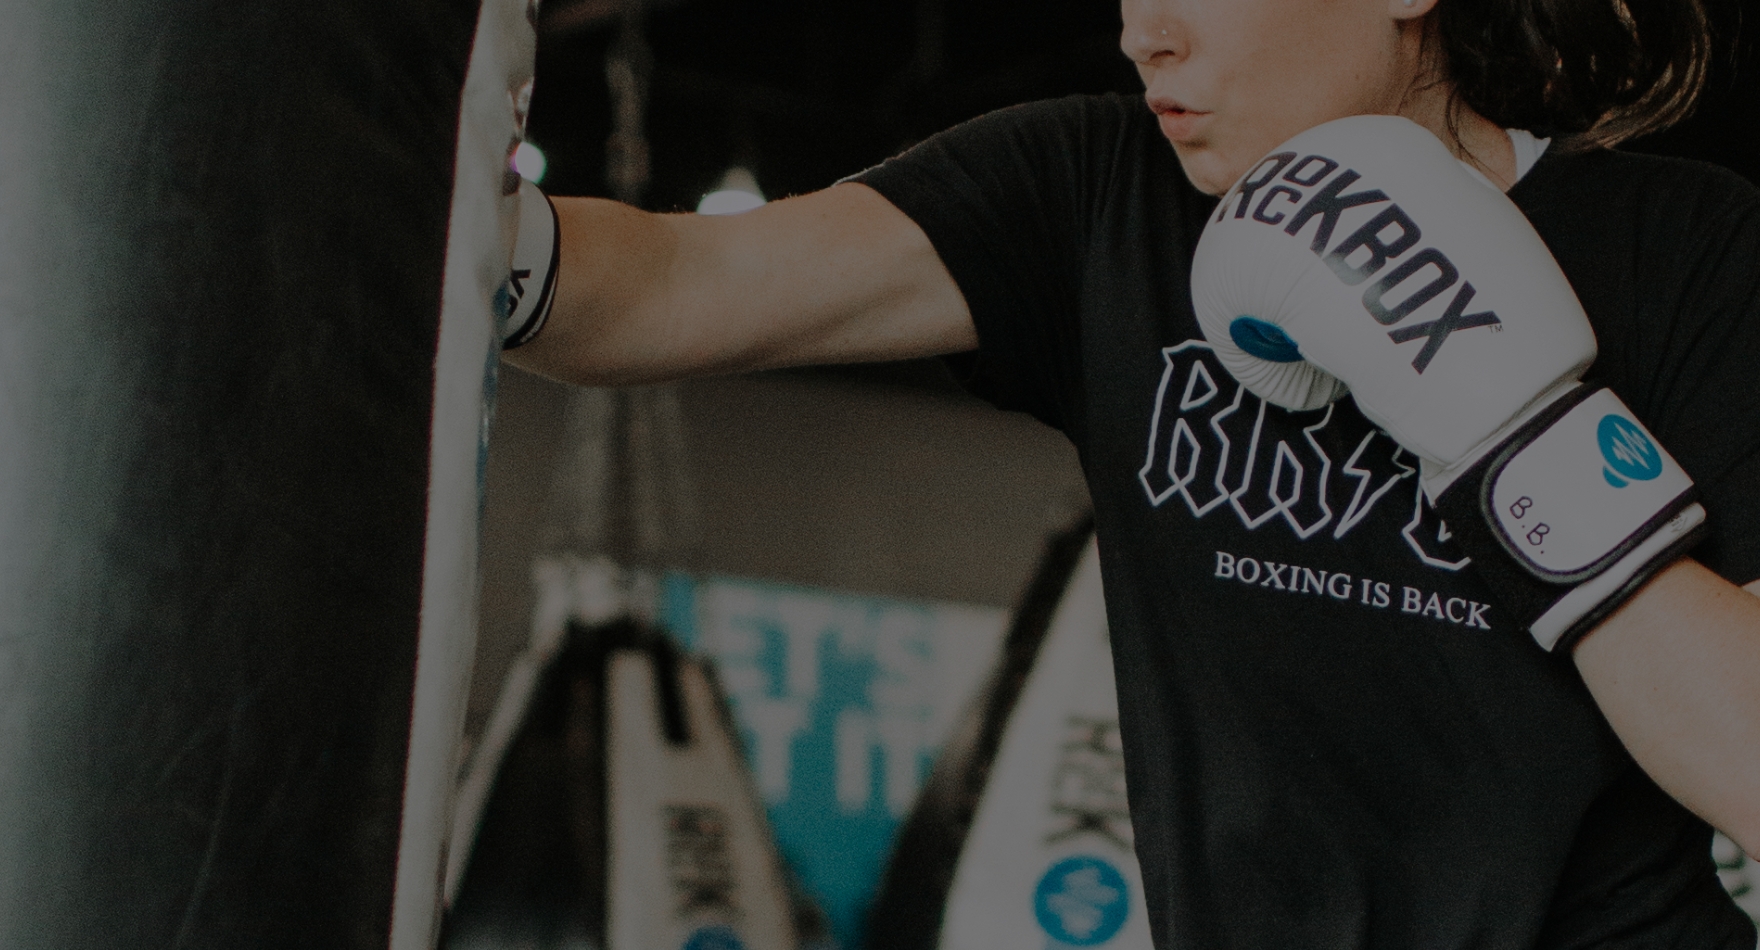 Boxing Classes, Kickboxing Workout